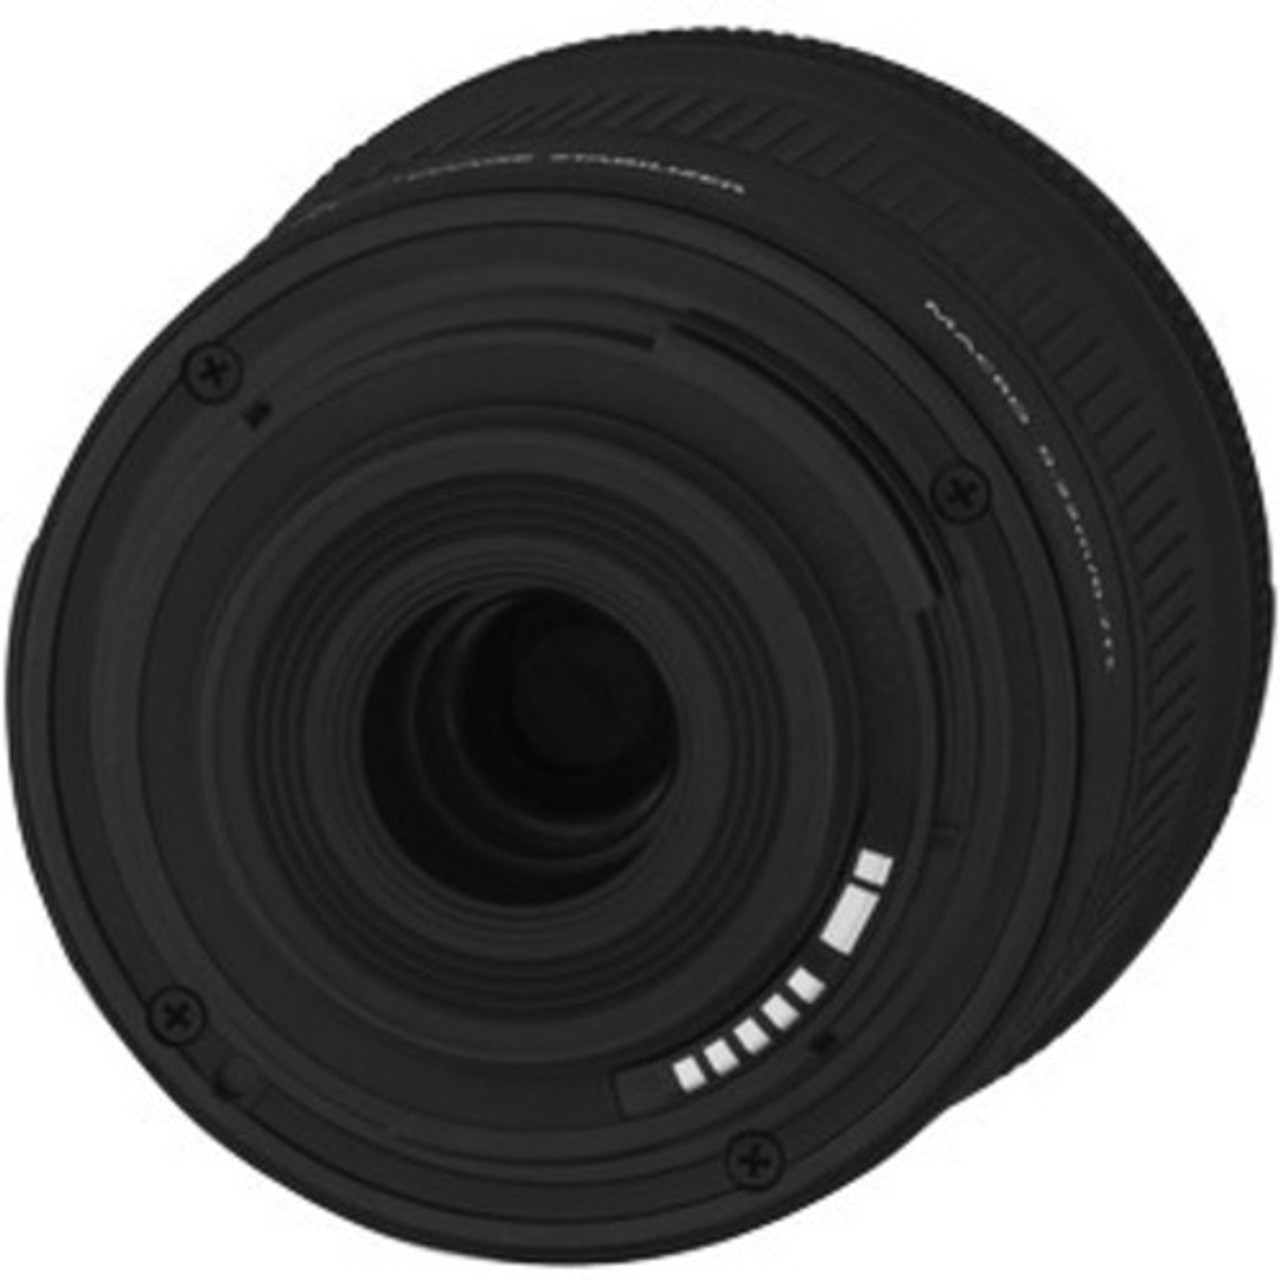 Canon - EF-S 10-18mm f/4.5-5.6 IS STM Ultra-Wide Zoom Lens - Black